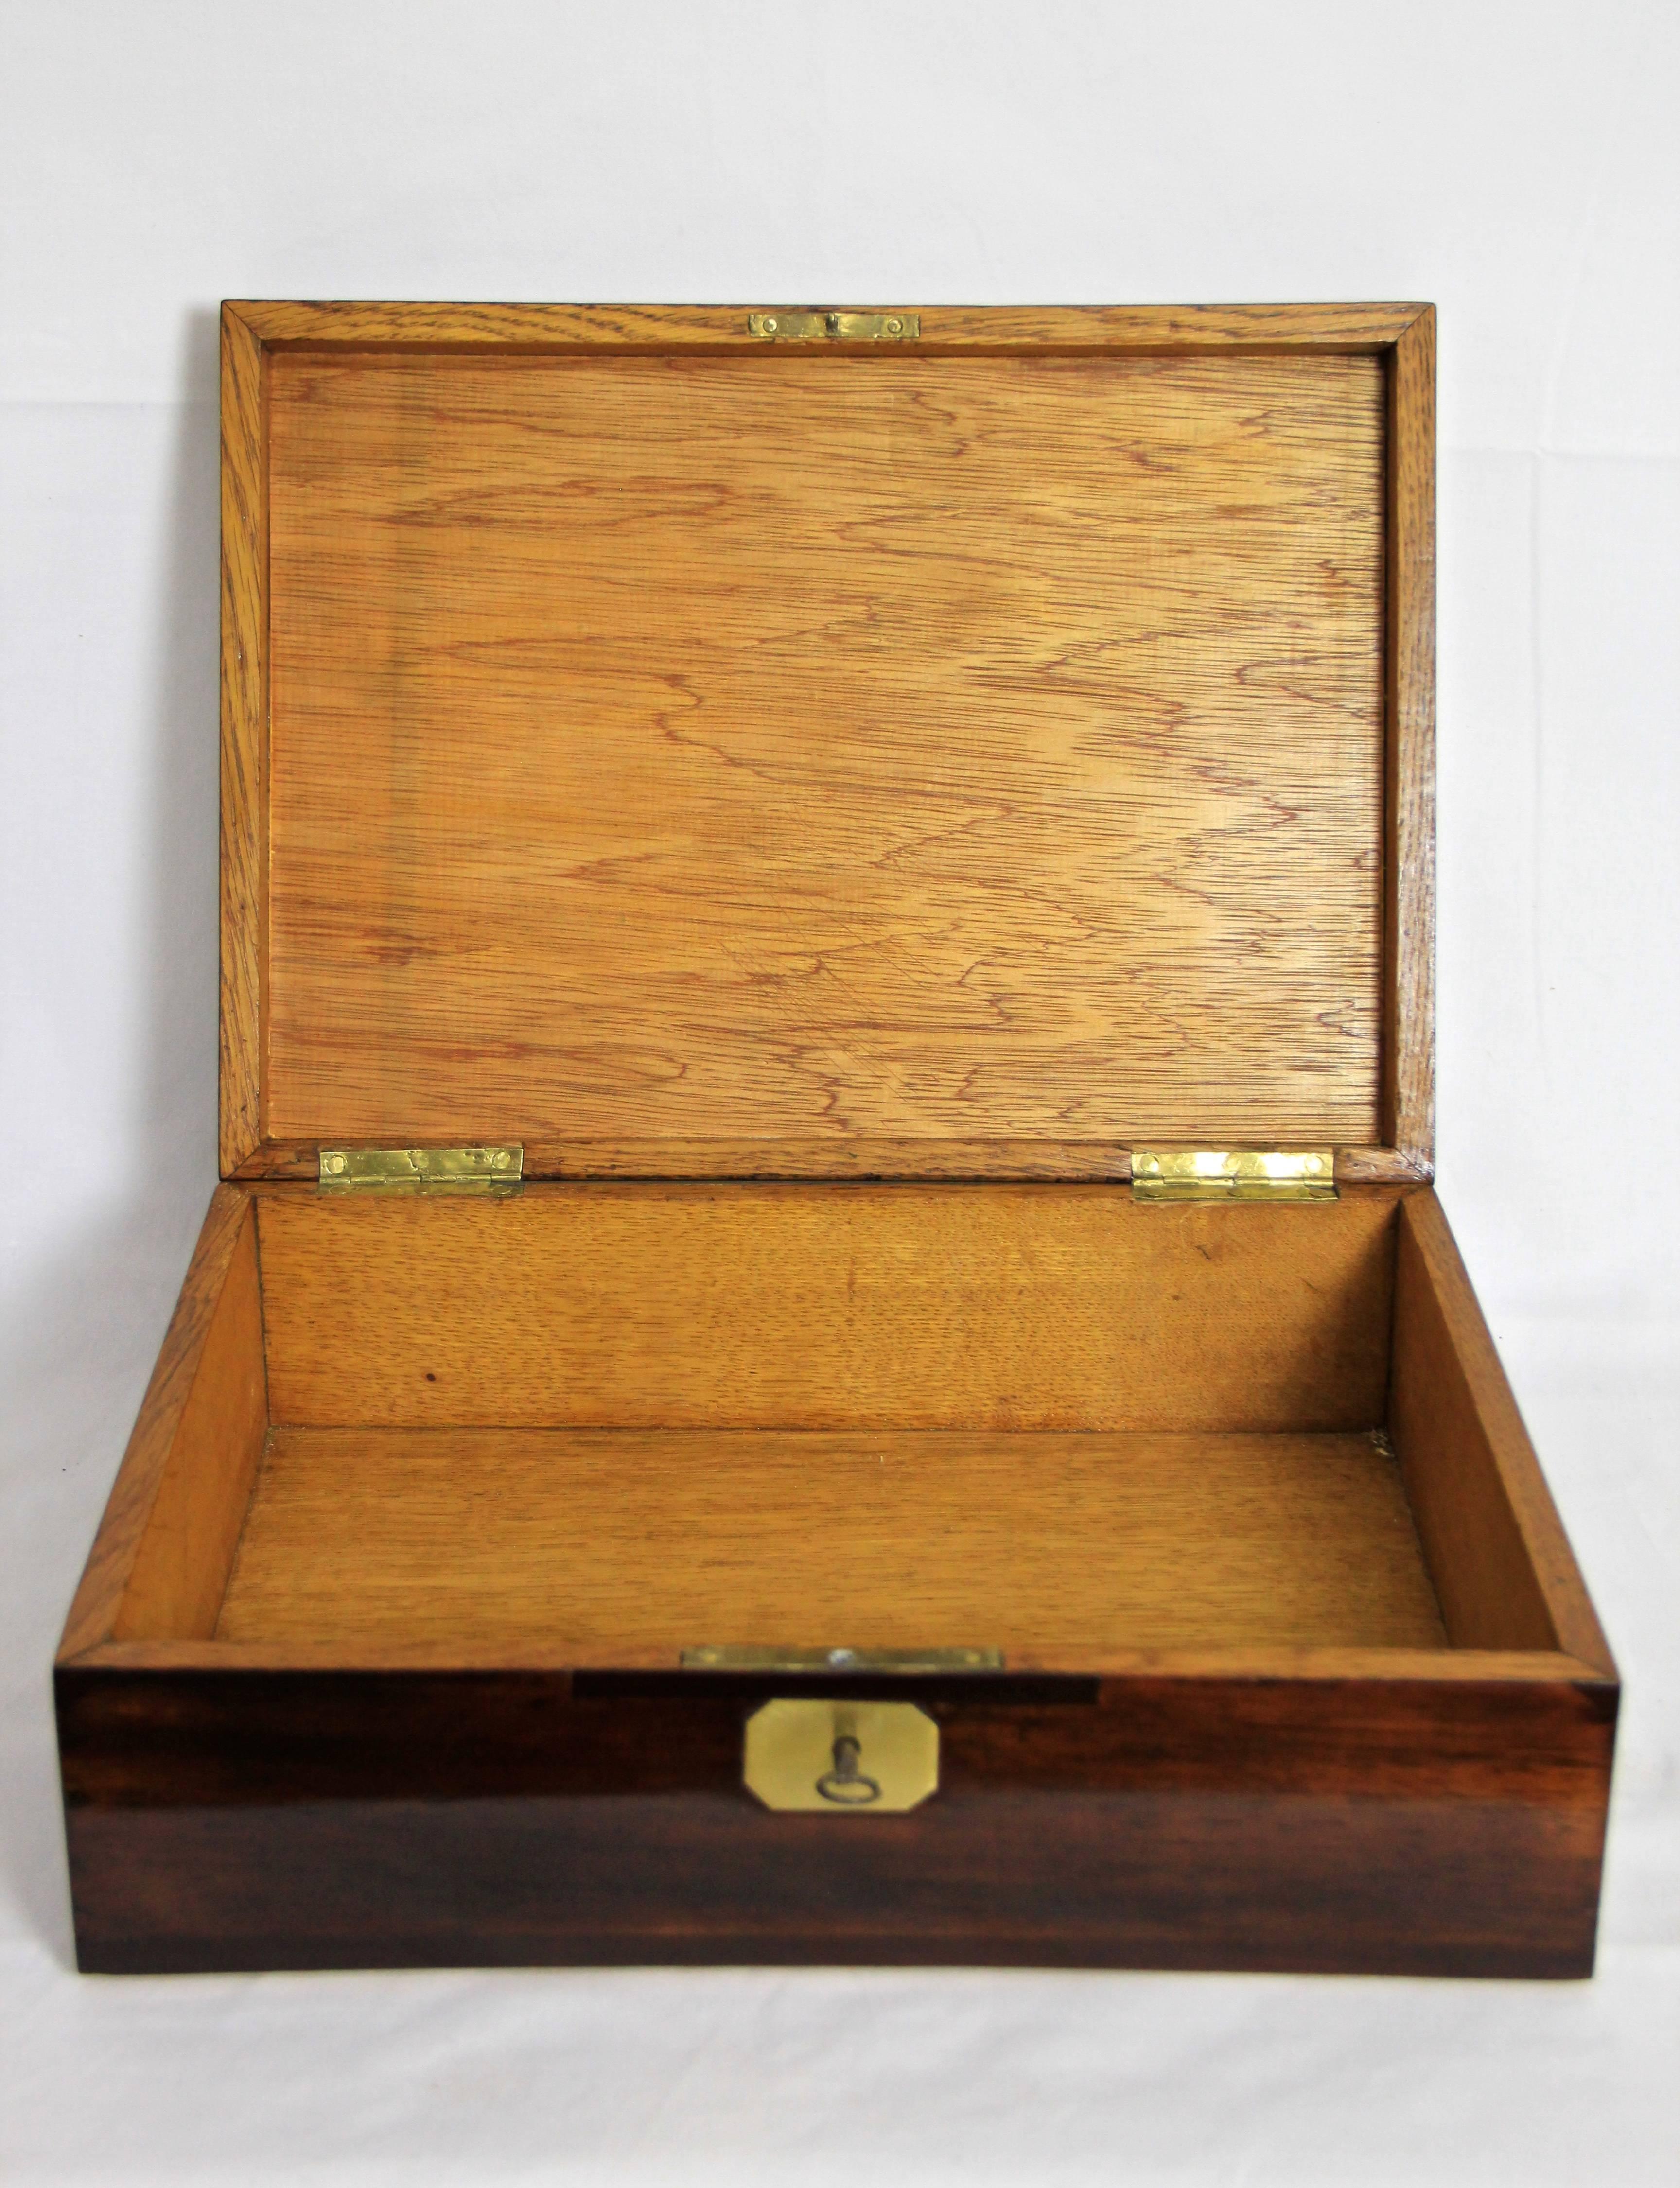 Austrian Art Nouveau Rosewood Box with Brass Applications, circa 1900